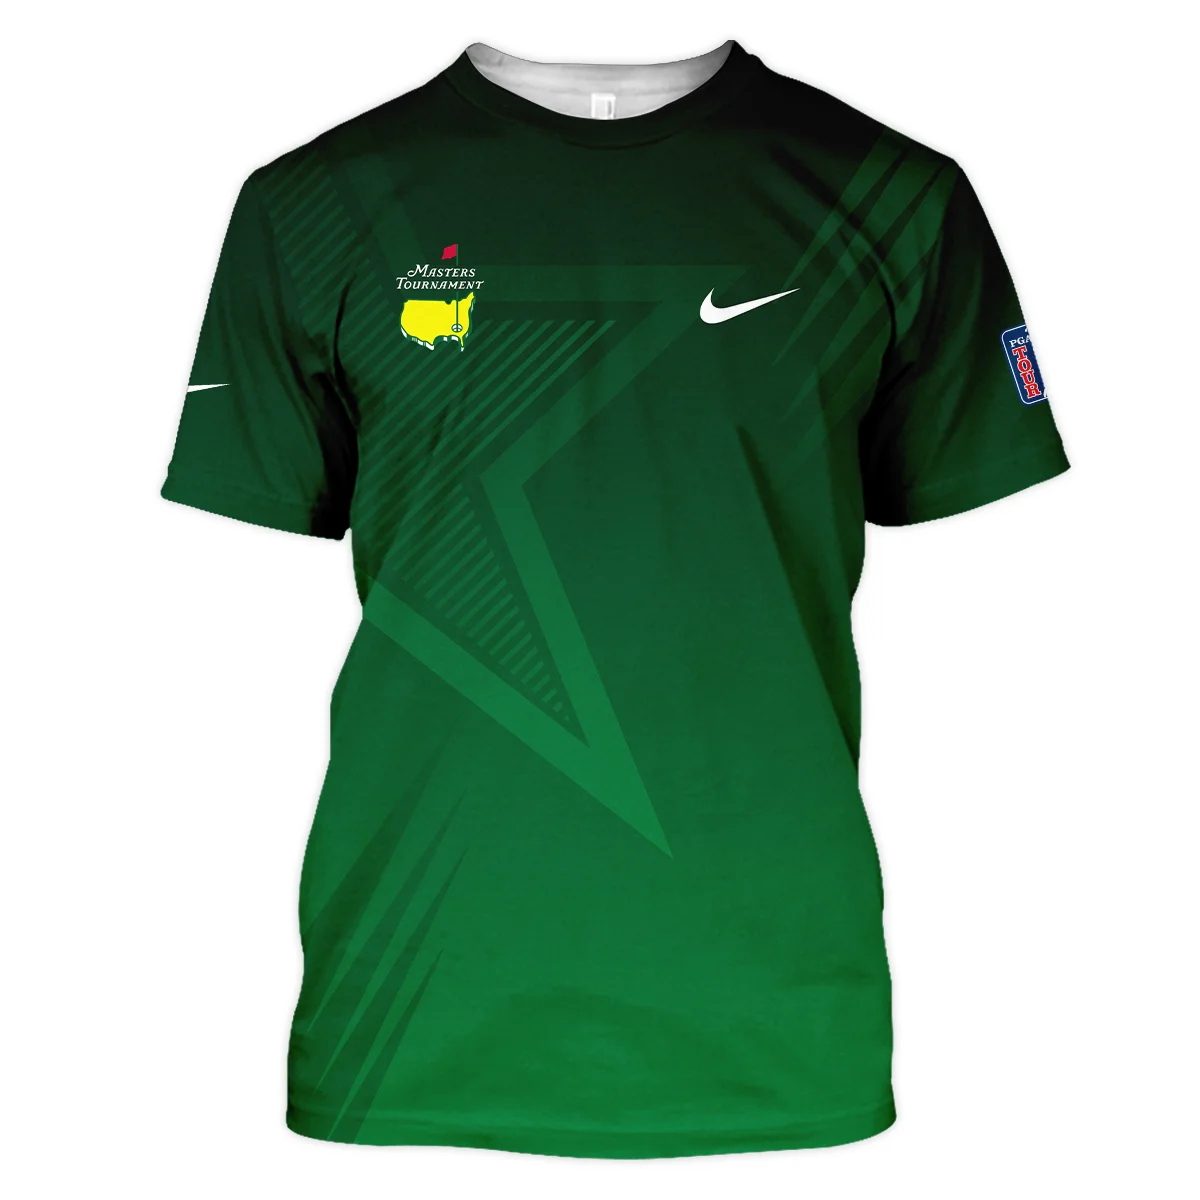 Nike Masters Tournament Polo Shirt Dark Green Gradient Star Pattern Golf Sports Vneck Polo Shirt Style Classic Polo Shirt For Men